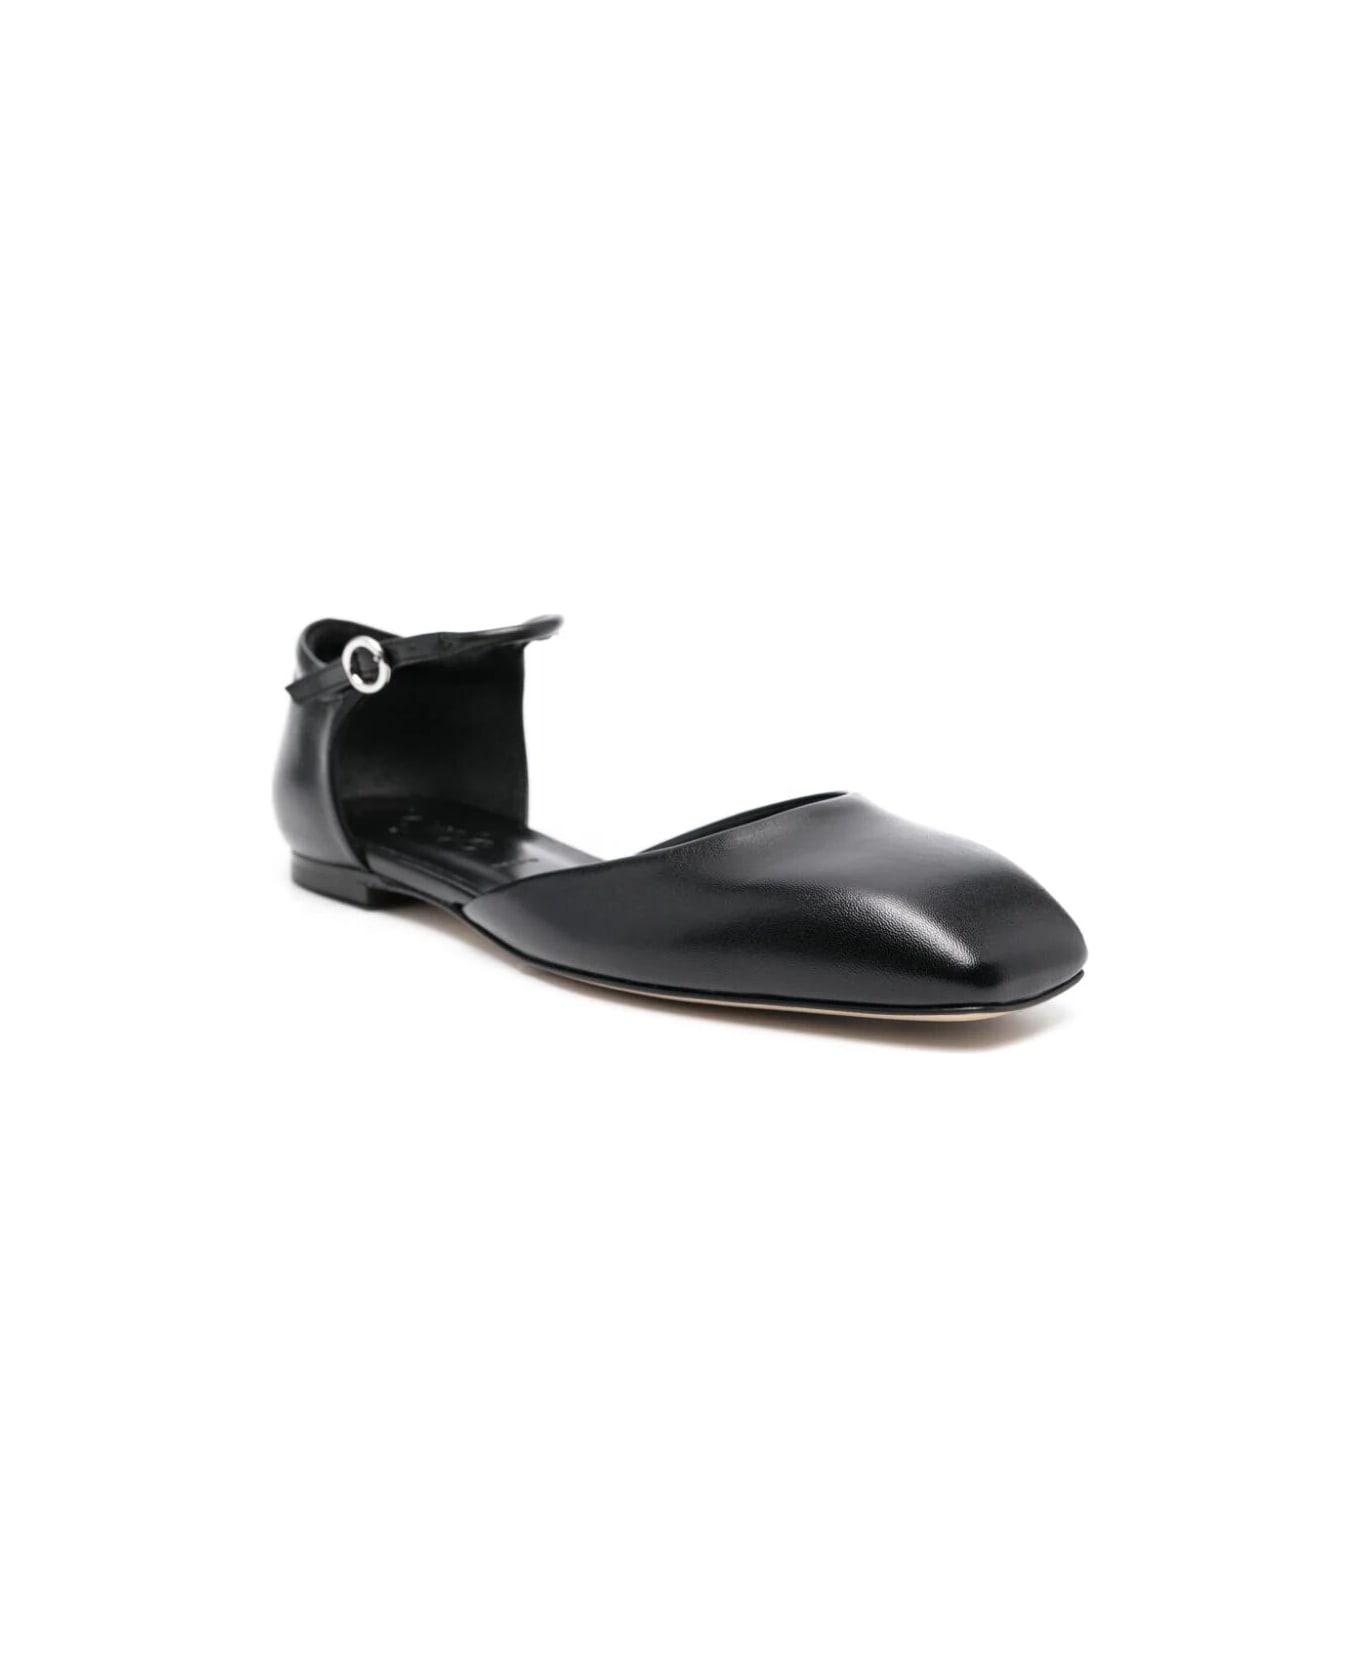 aeyde Miri Nappa Leather Black Shoes - Black フラットシューズ